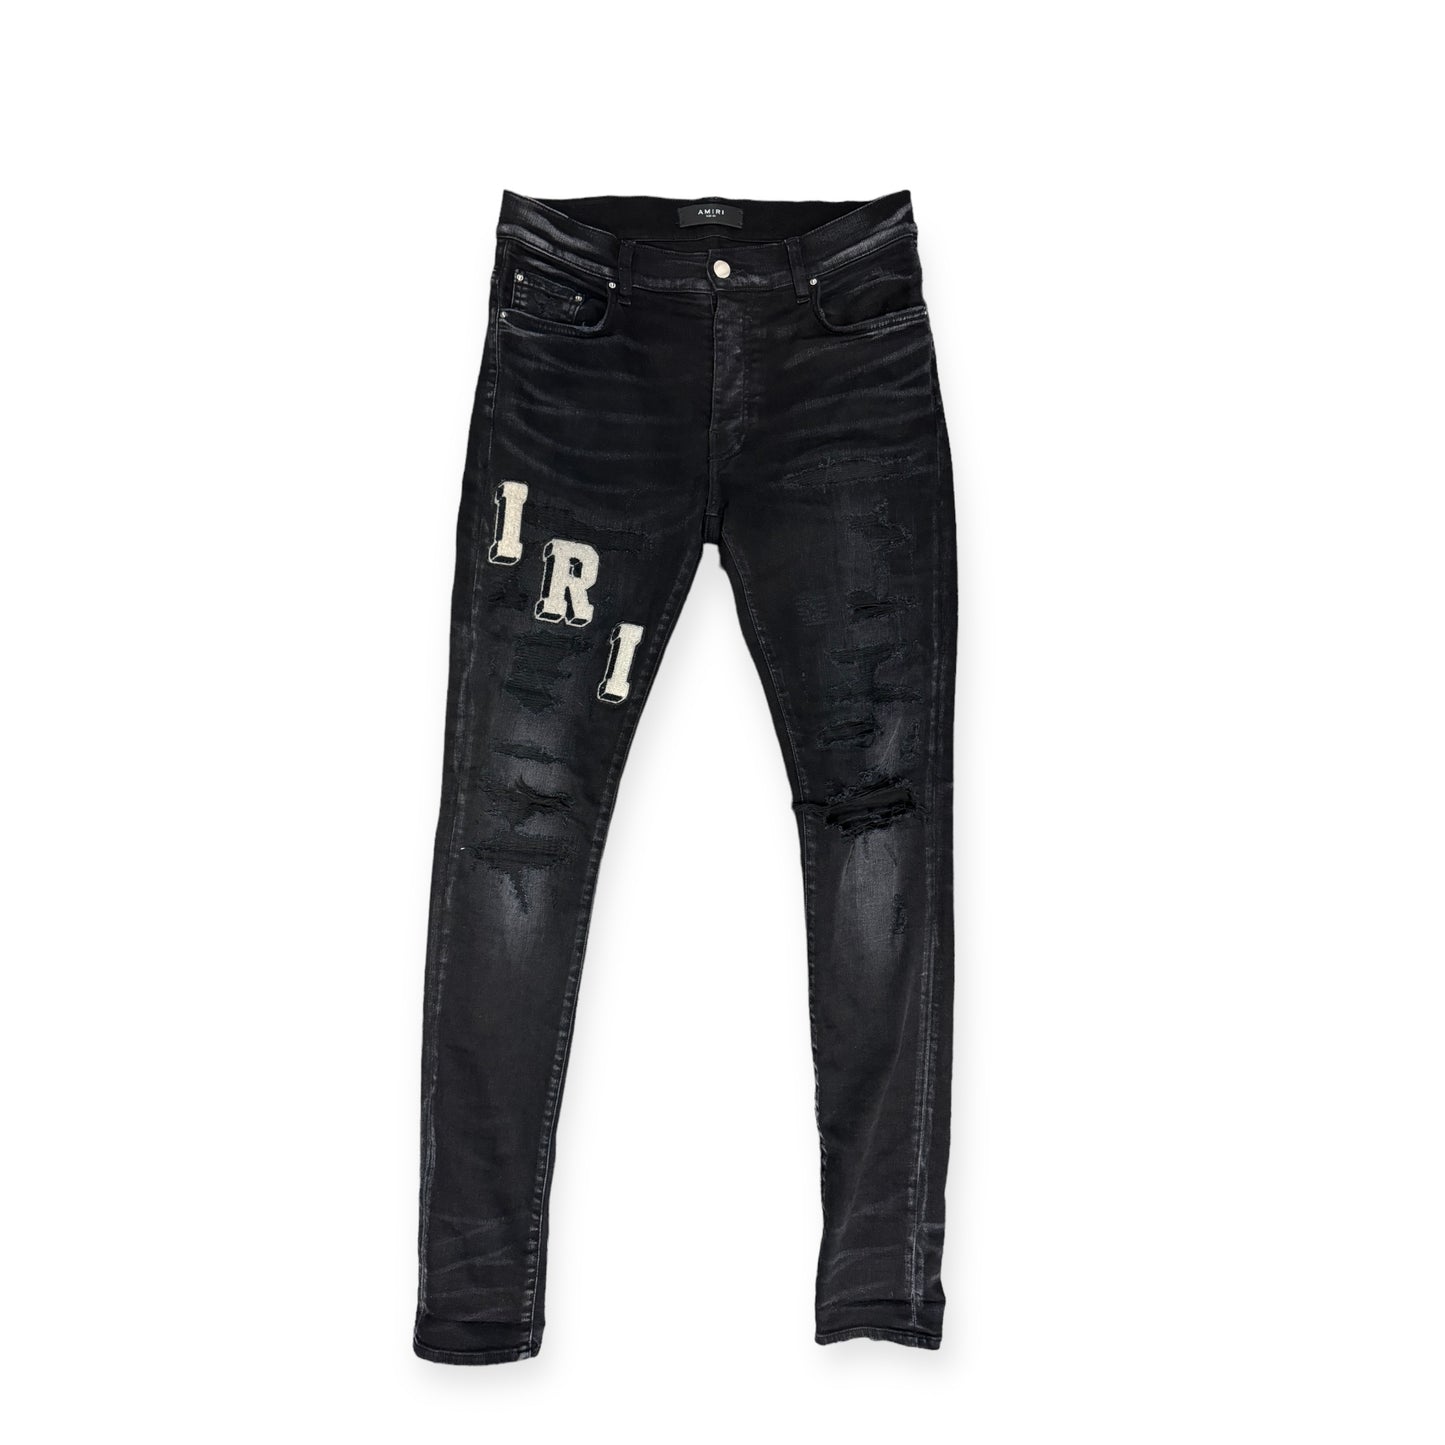 Amiri Denim Black Jeans Size 30